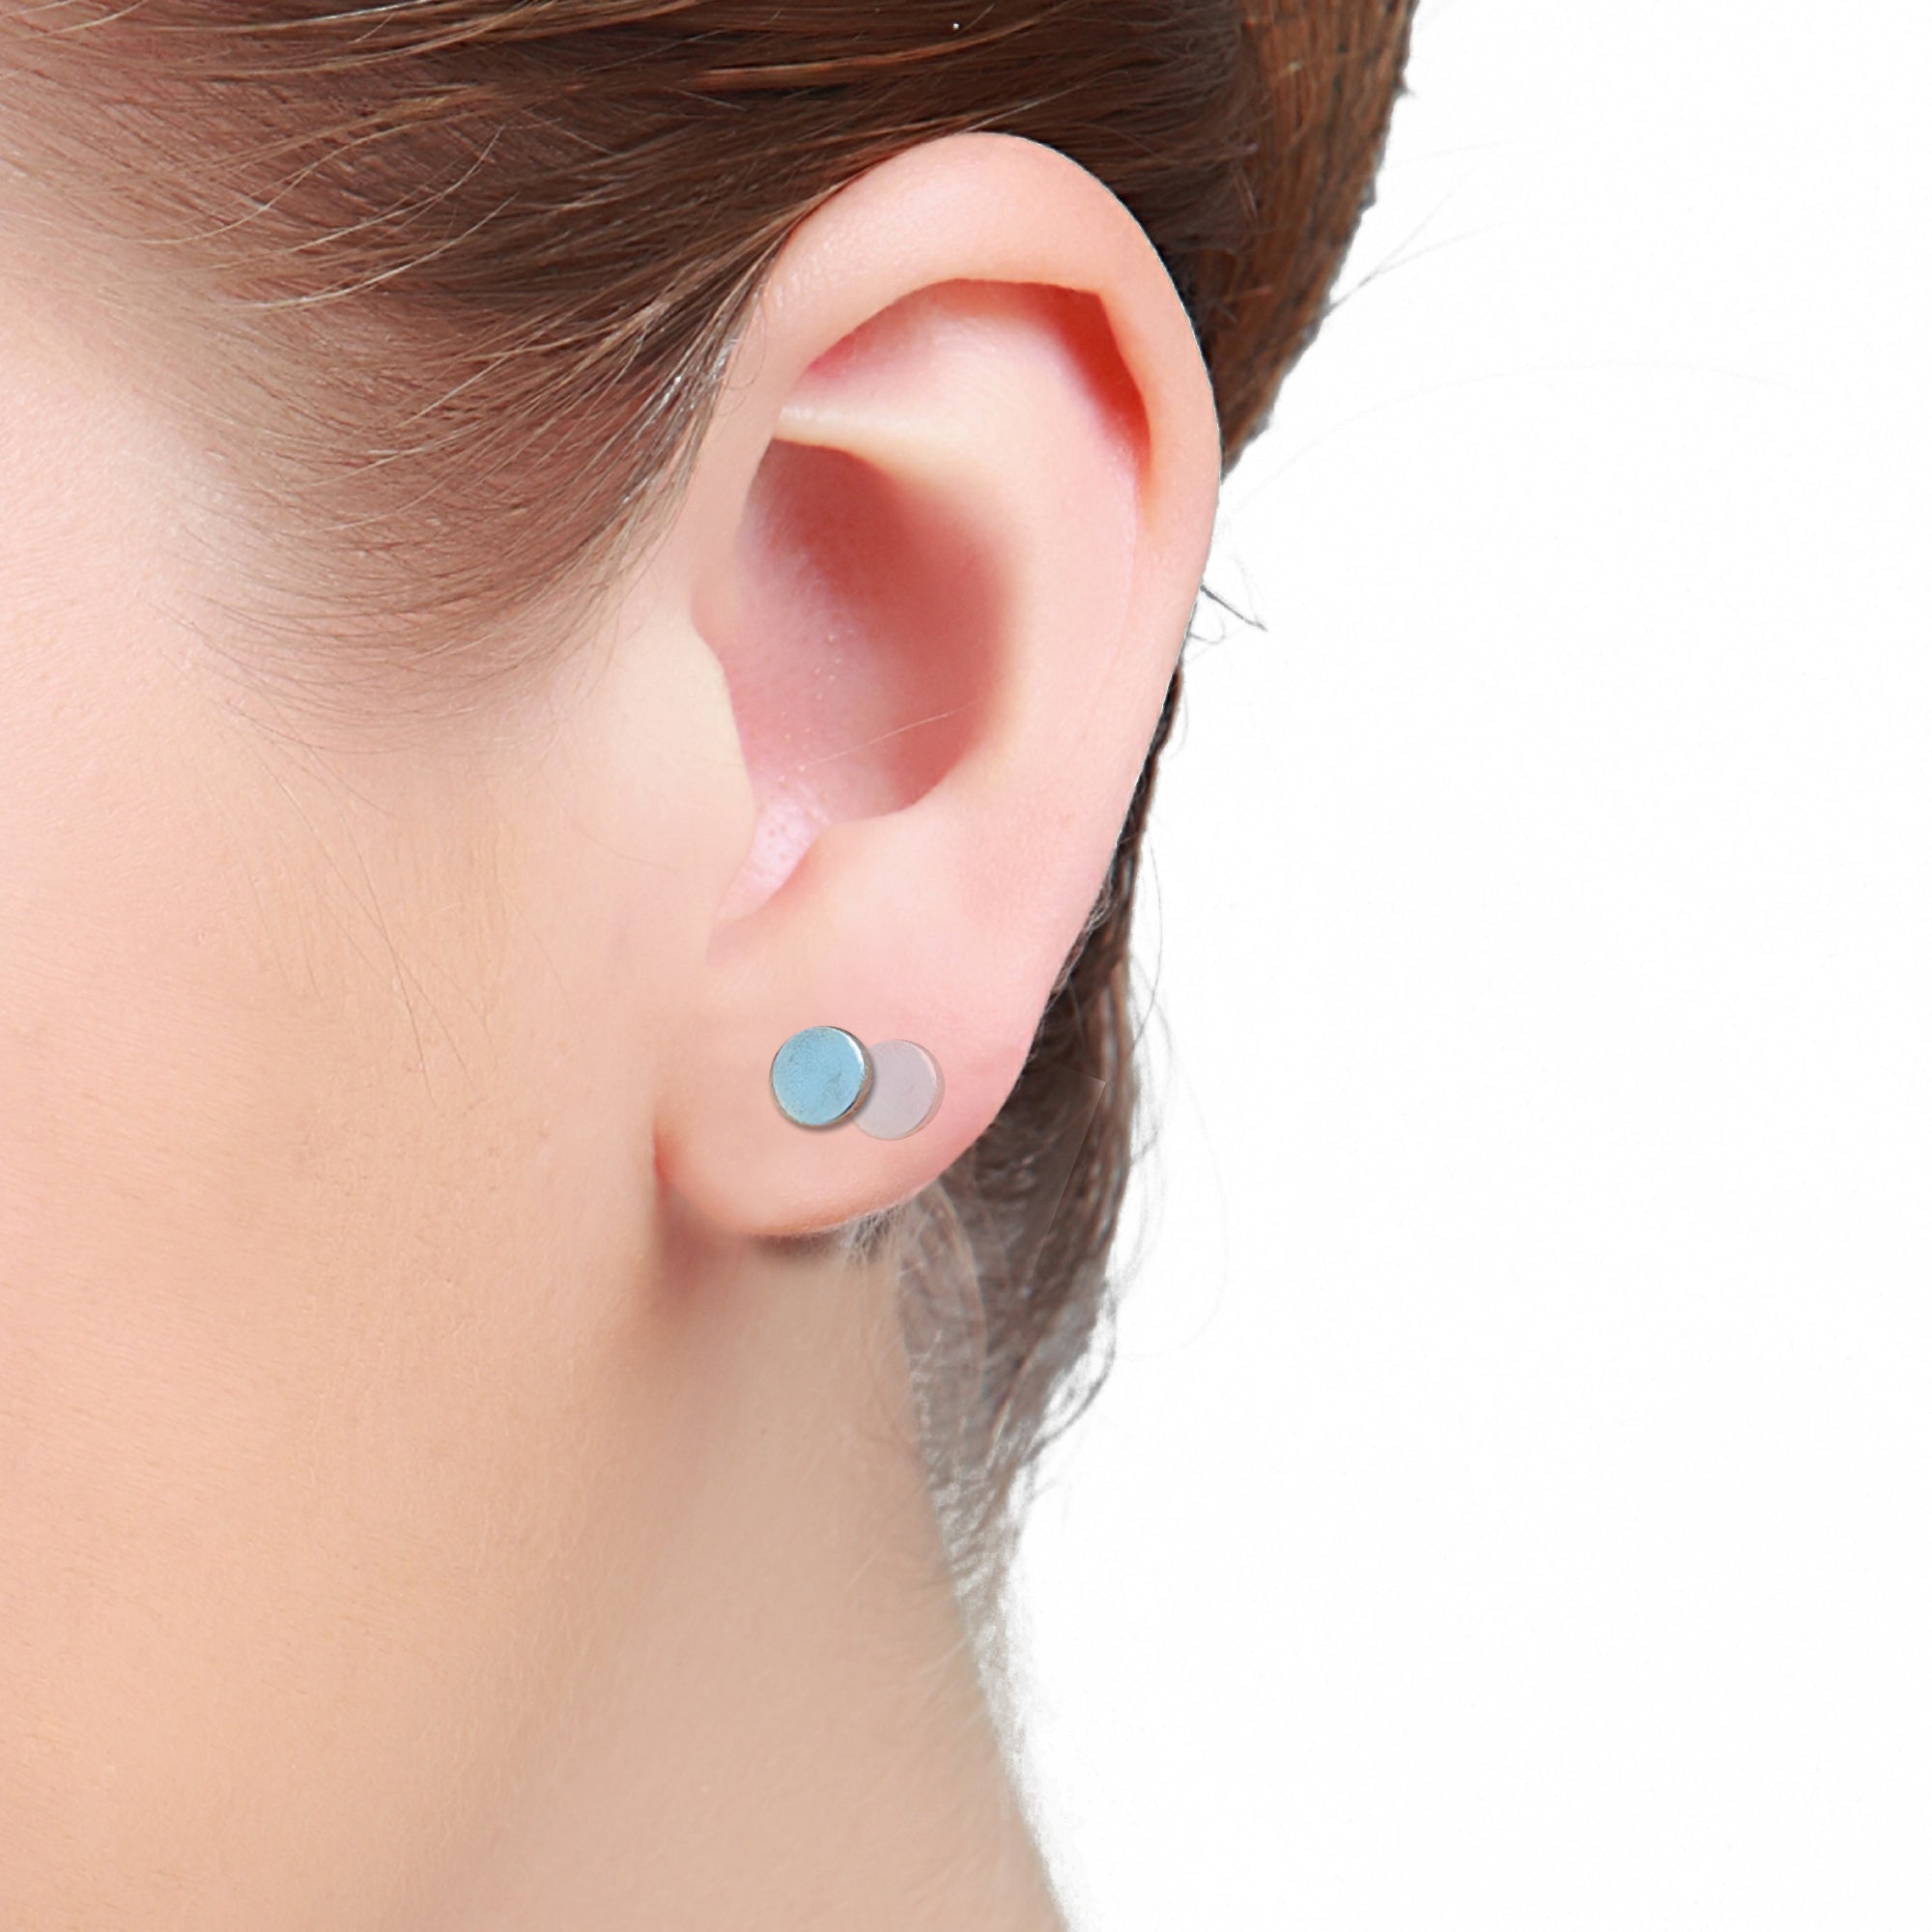 2 MAGNETIC GLOW IN THE DARK EARRINGS new fashion jewelry magnets kids girls  | eBay